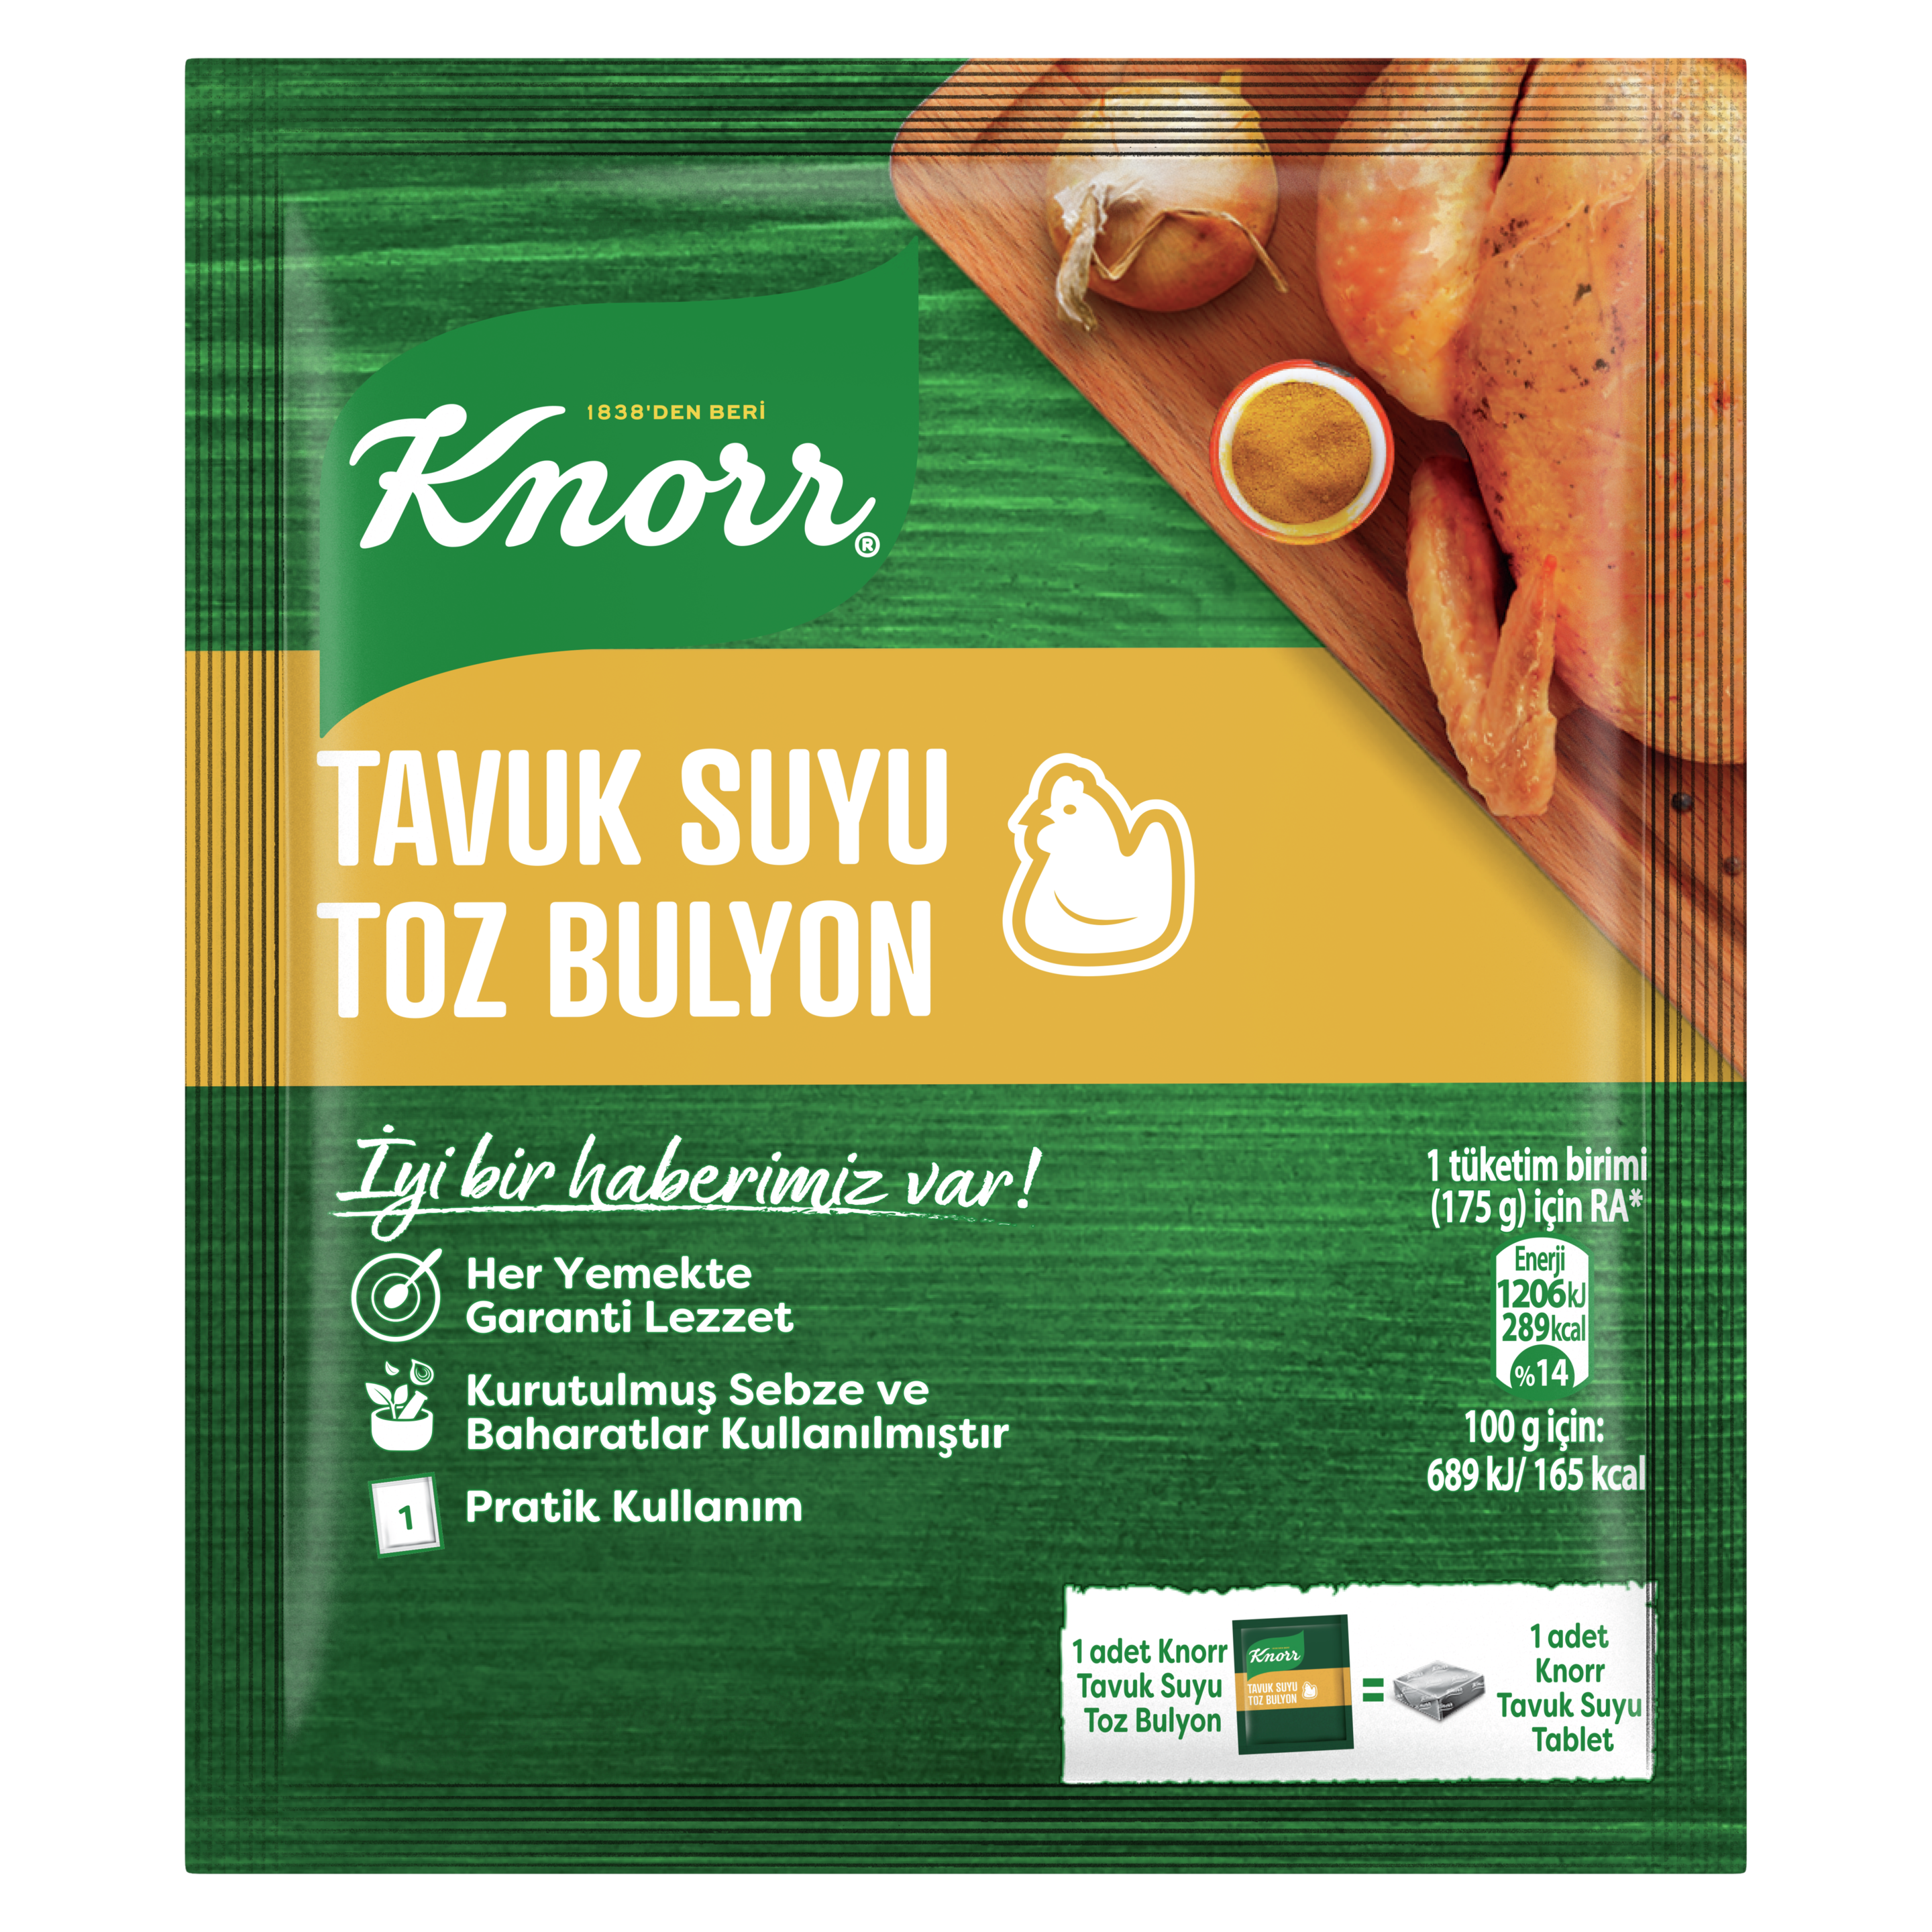 Knorr Tavuk Suyu Toz Bulyon